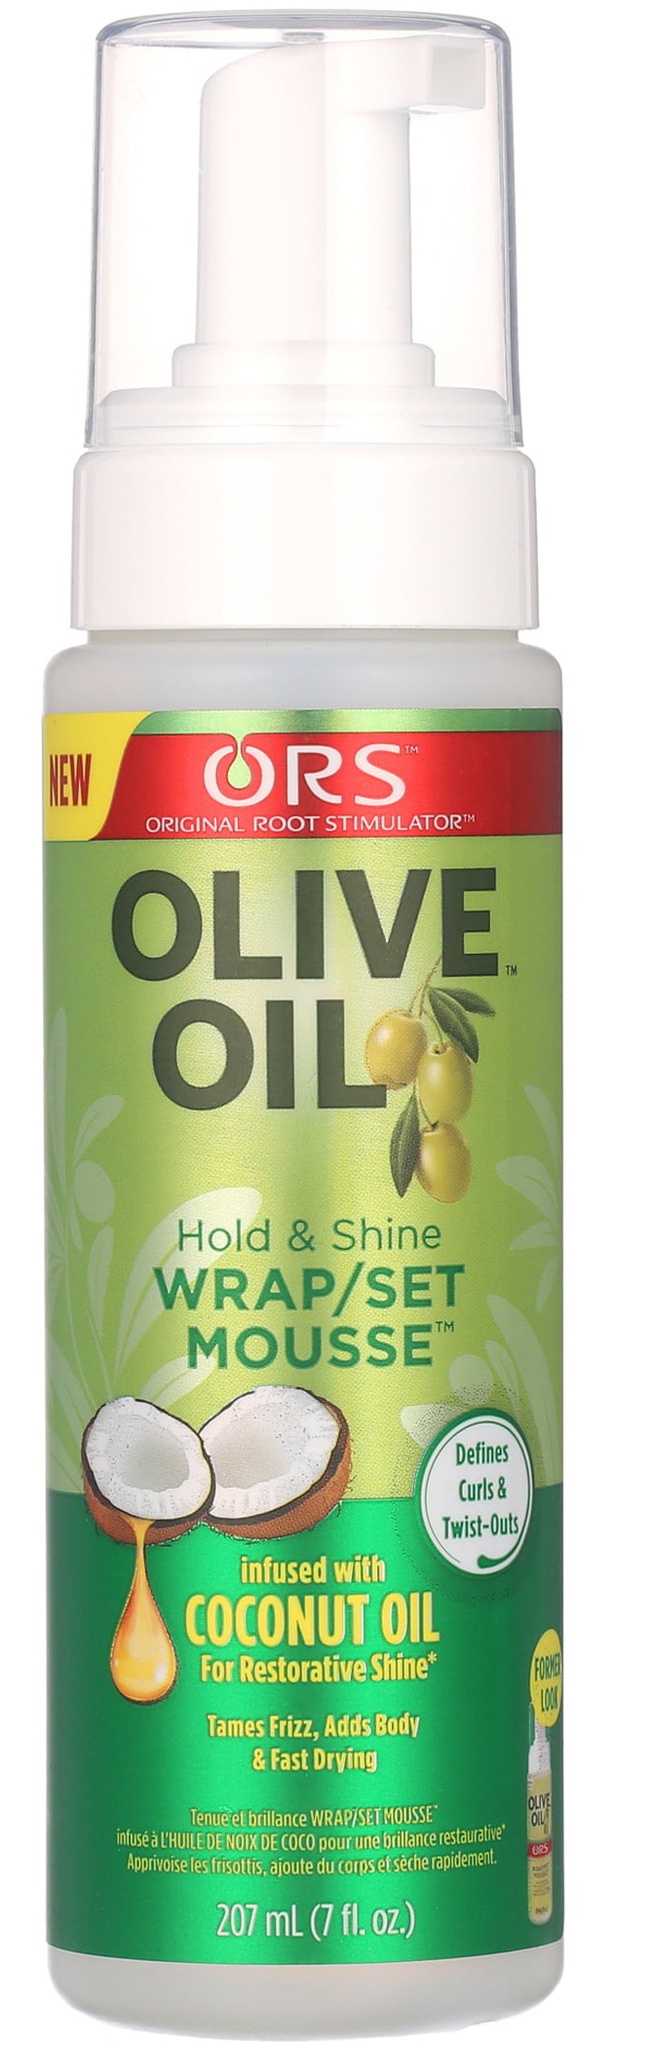 Ors  Olive Oil Hold & Shine Wrap Set Mousse